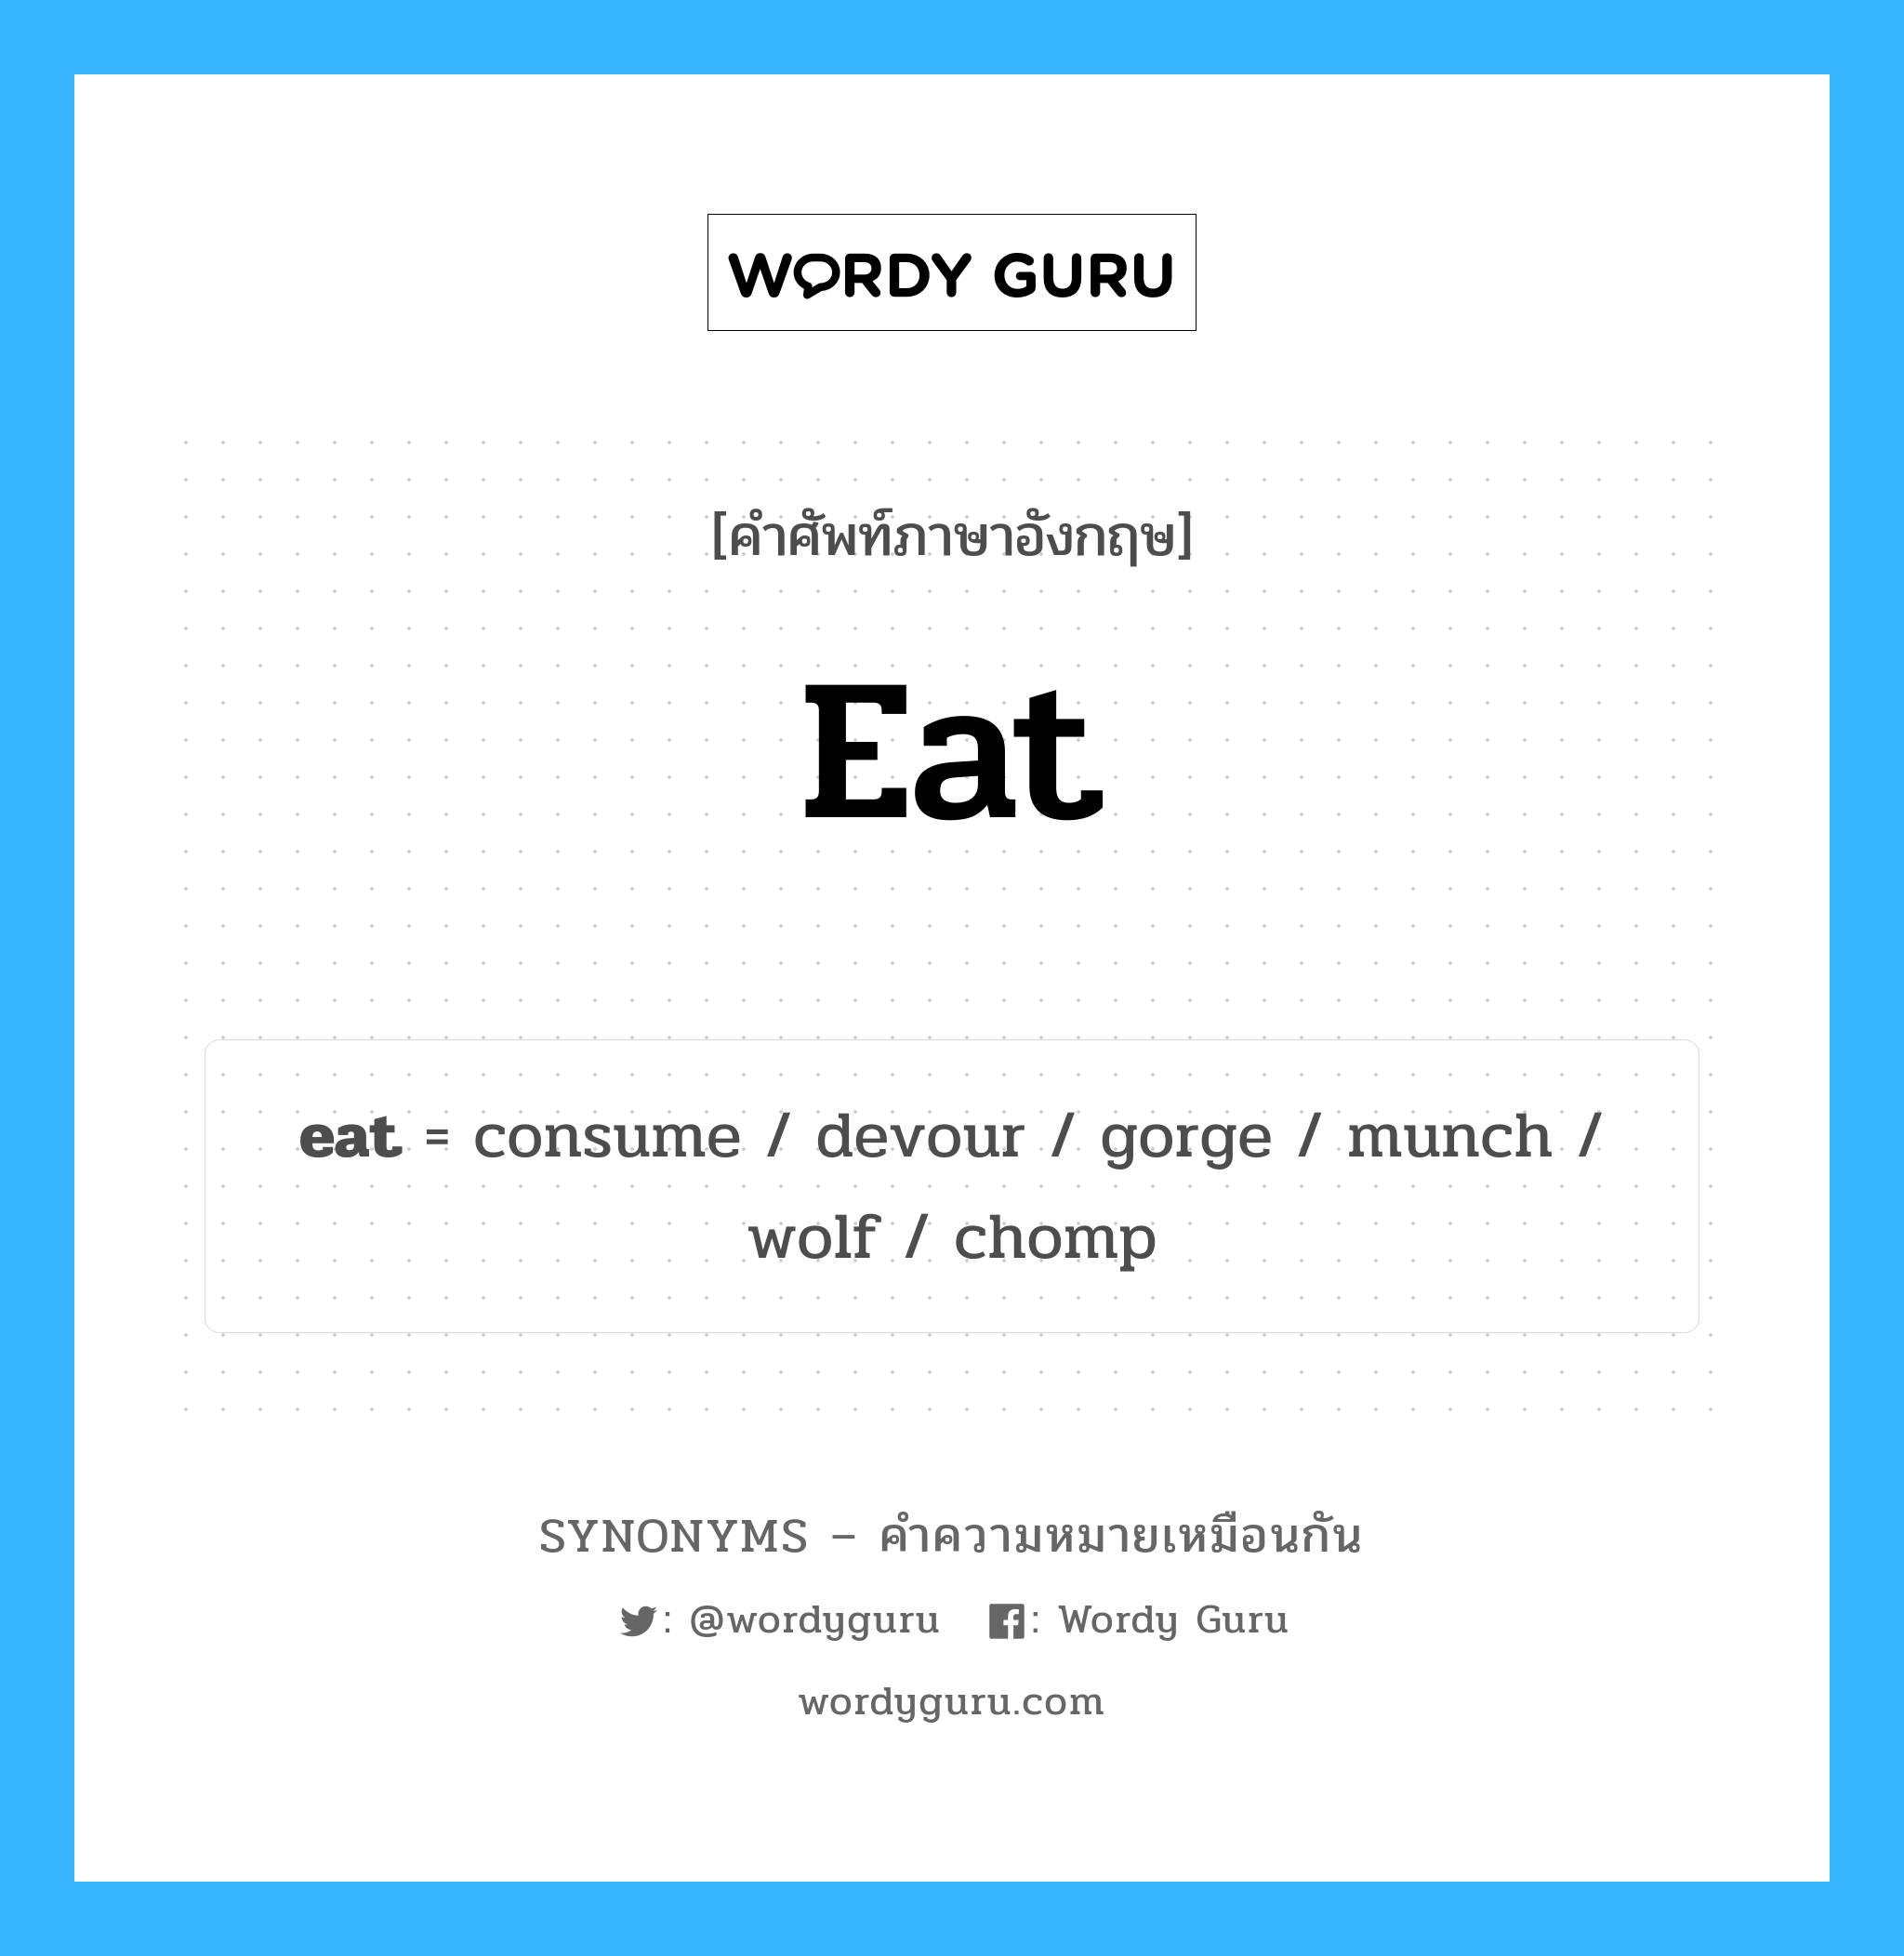 wolf เป็นหนึ่งใน eat และมีคำอื่น ๆ อีกดังนี้, คำศัพท์ภาษาอังกฤษ wolf ความหมายคล้ายกันกับ eat แปลว่า หมาป่า หมวด eat